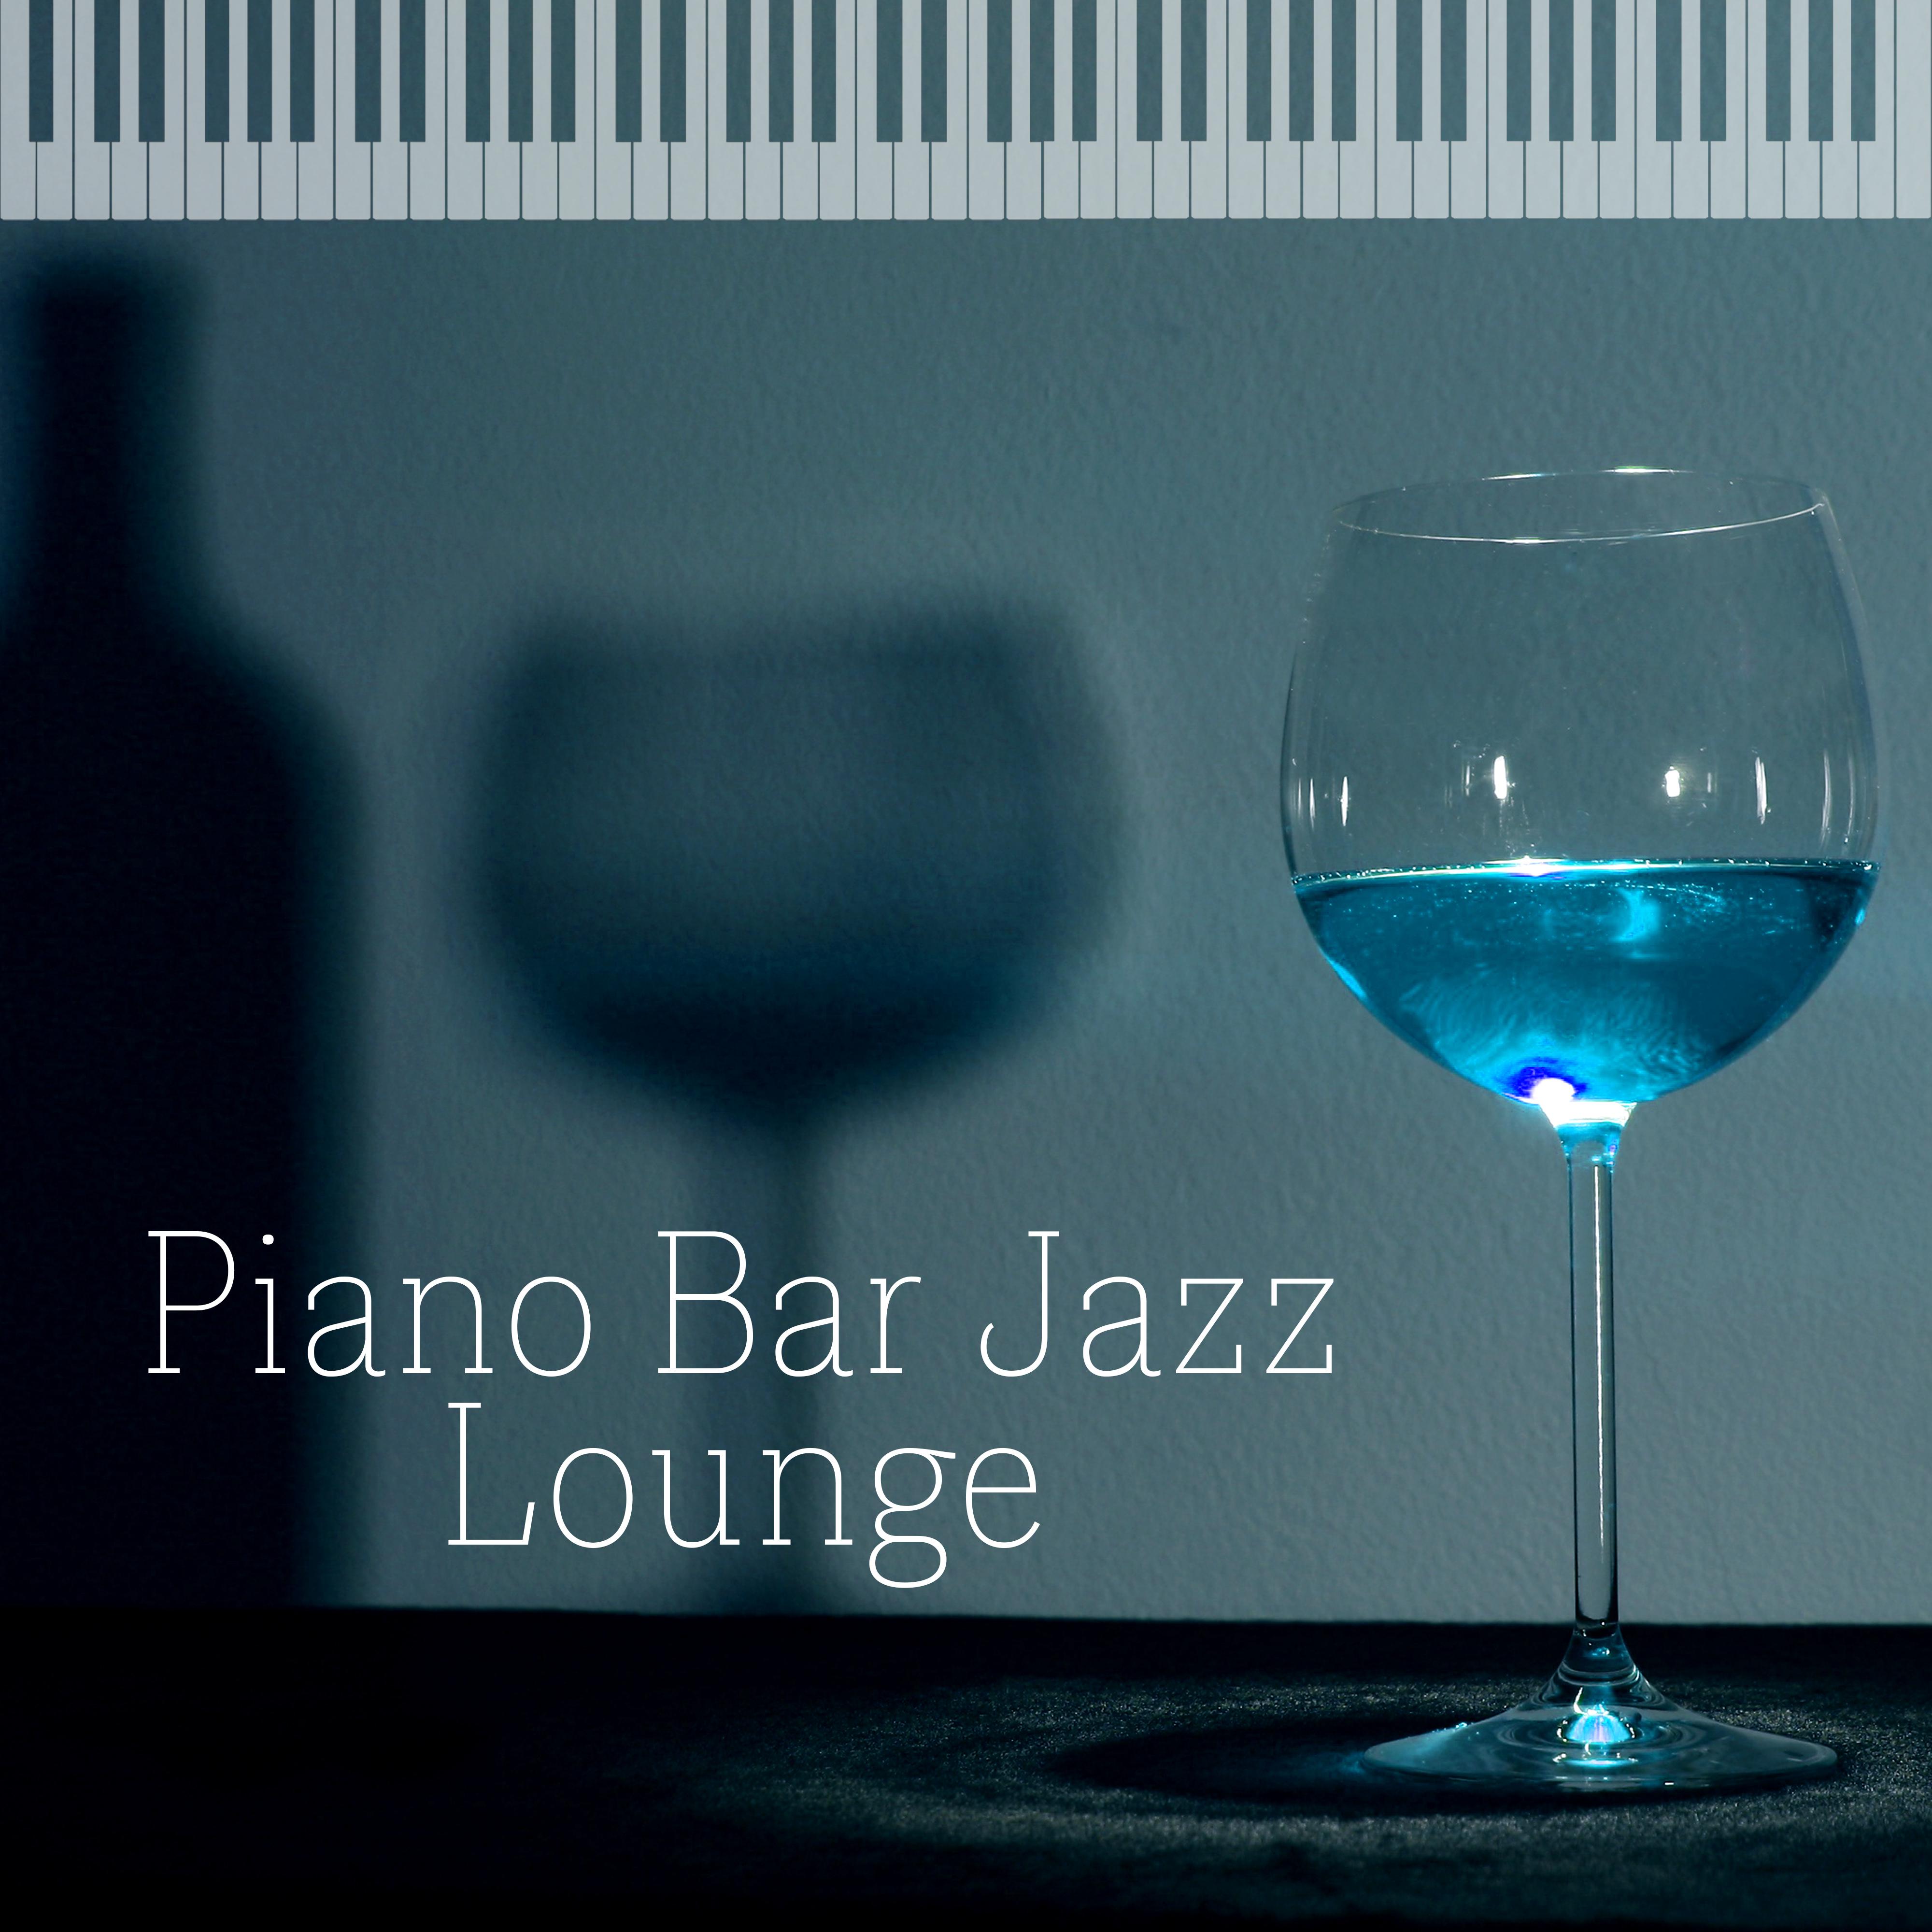 Piano Bar Jazz Lounge  Instrumental Piano, Ambient Jazz, Restaurant Music, Cafe Lounge, Calming Jazz Sounds